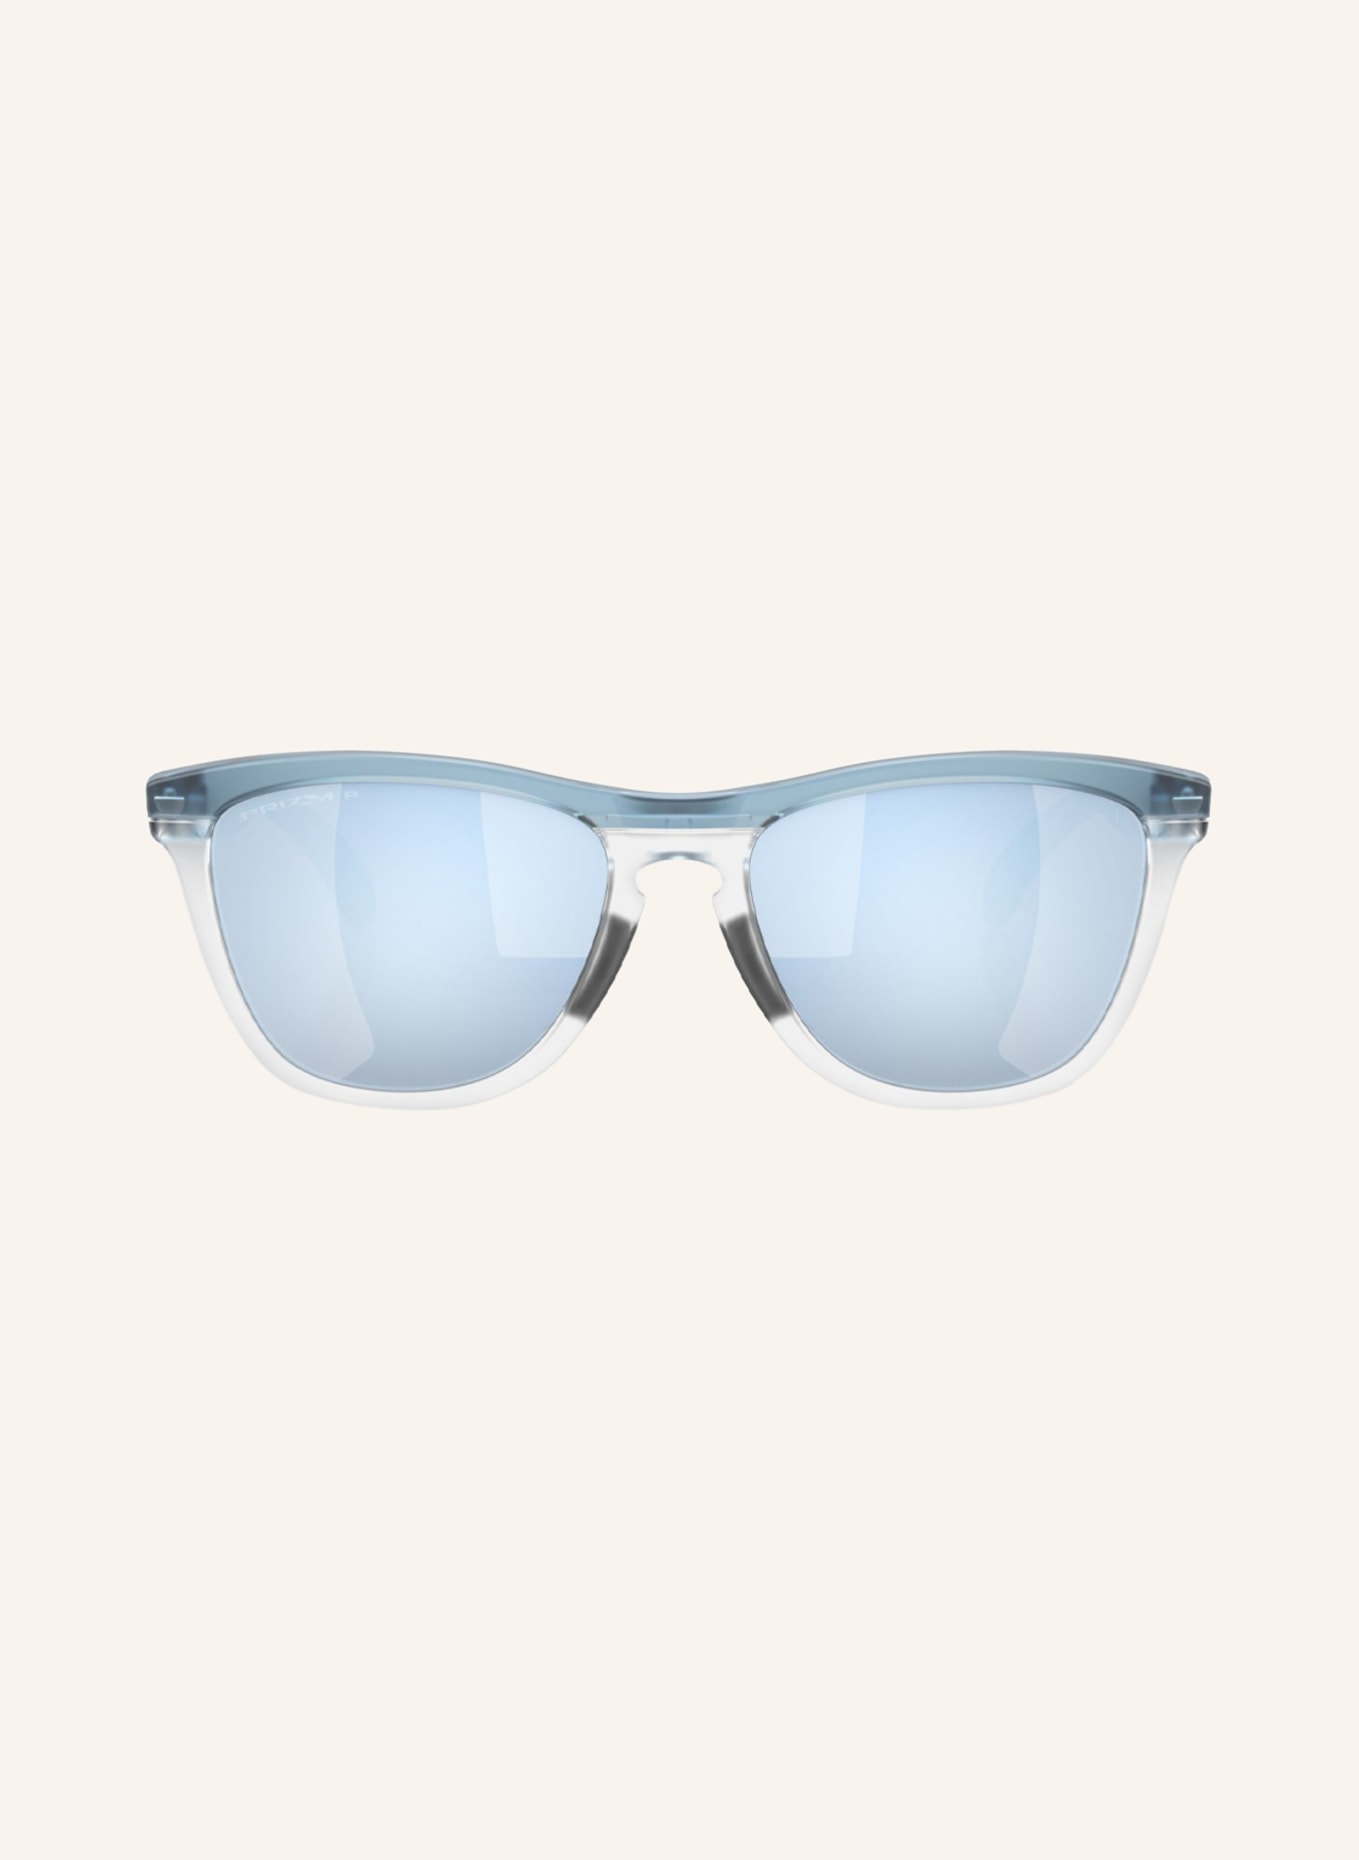 OAKLEY Sunglasses OO9284 FROGSKINS in 928409 blue-gray/ pink polarized